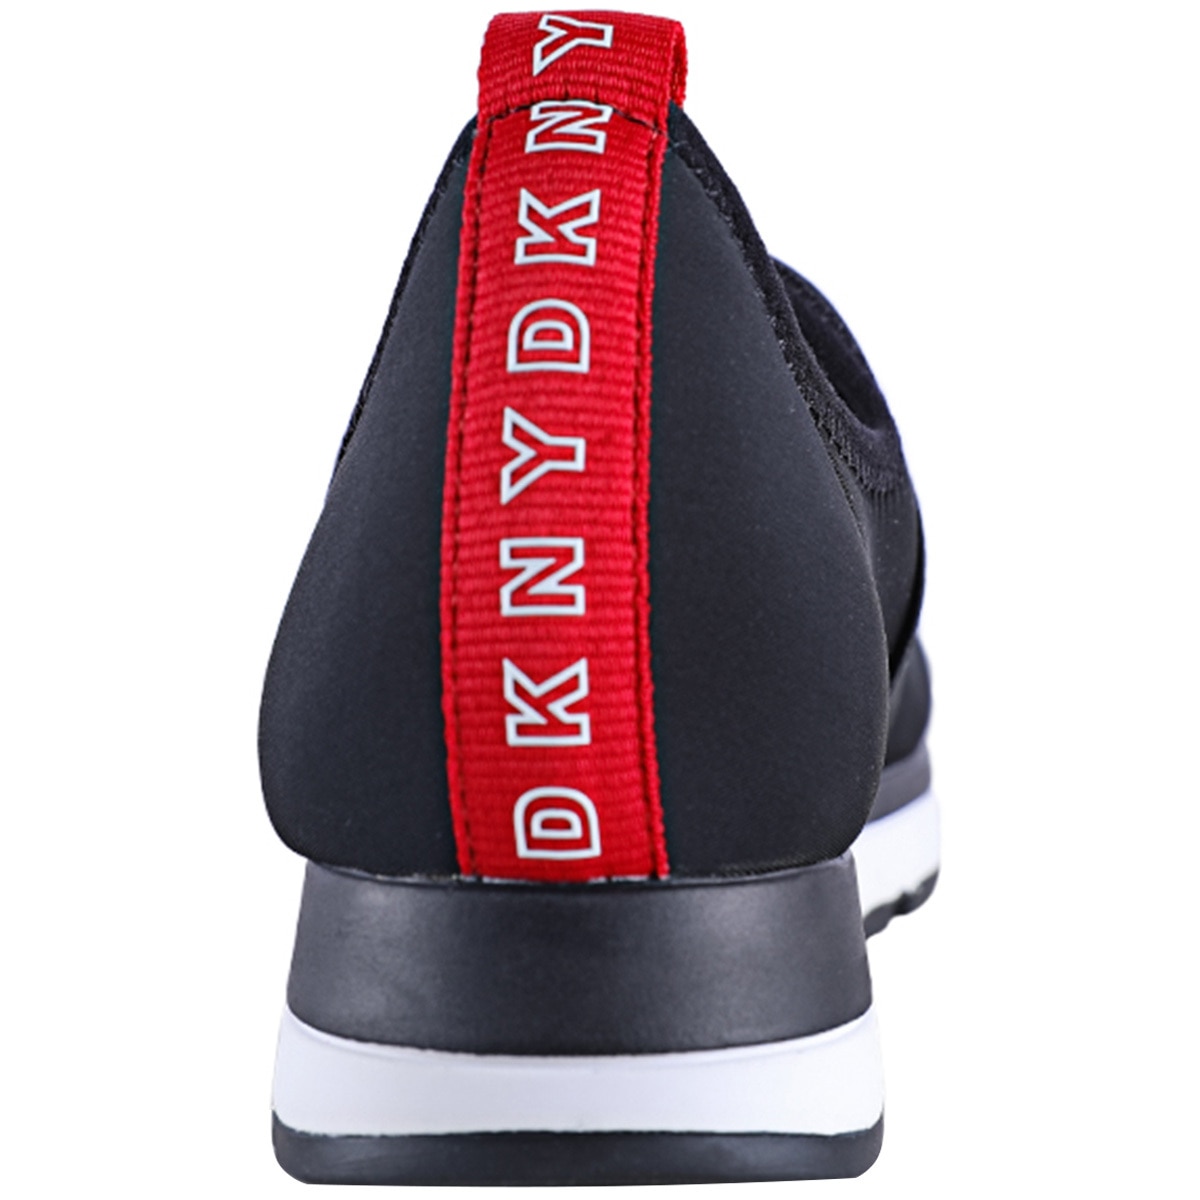 DKNY Women's Slip On Shoe - Red/Black